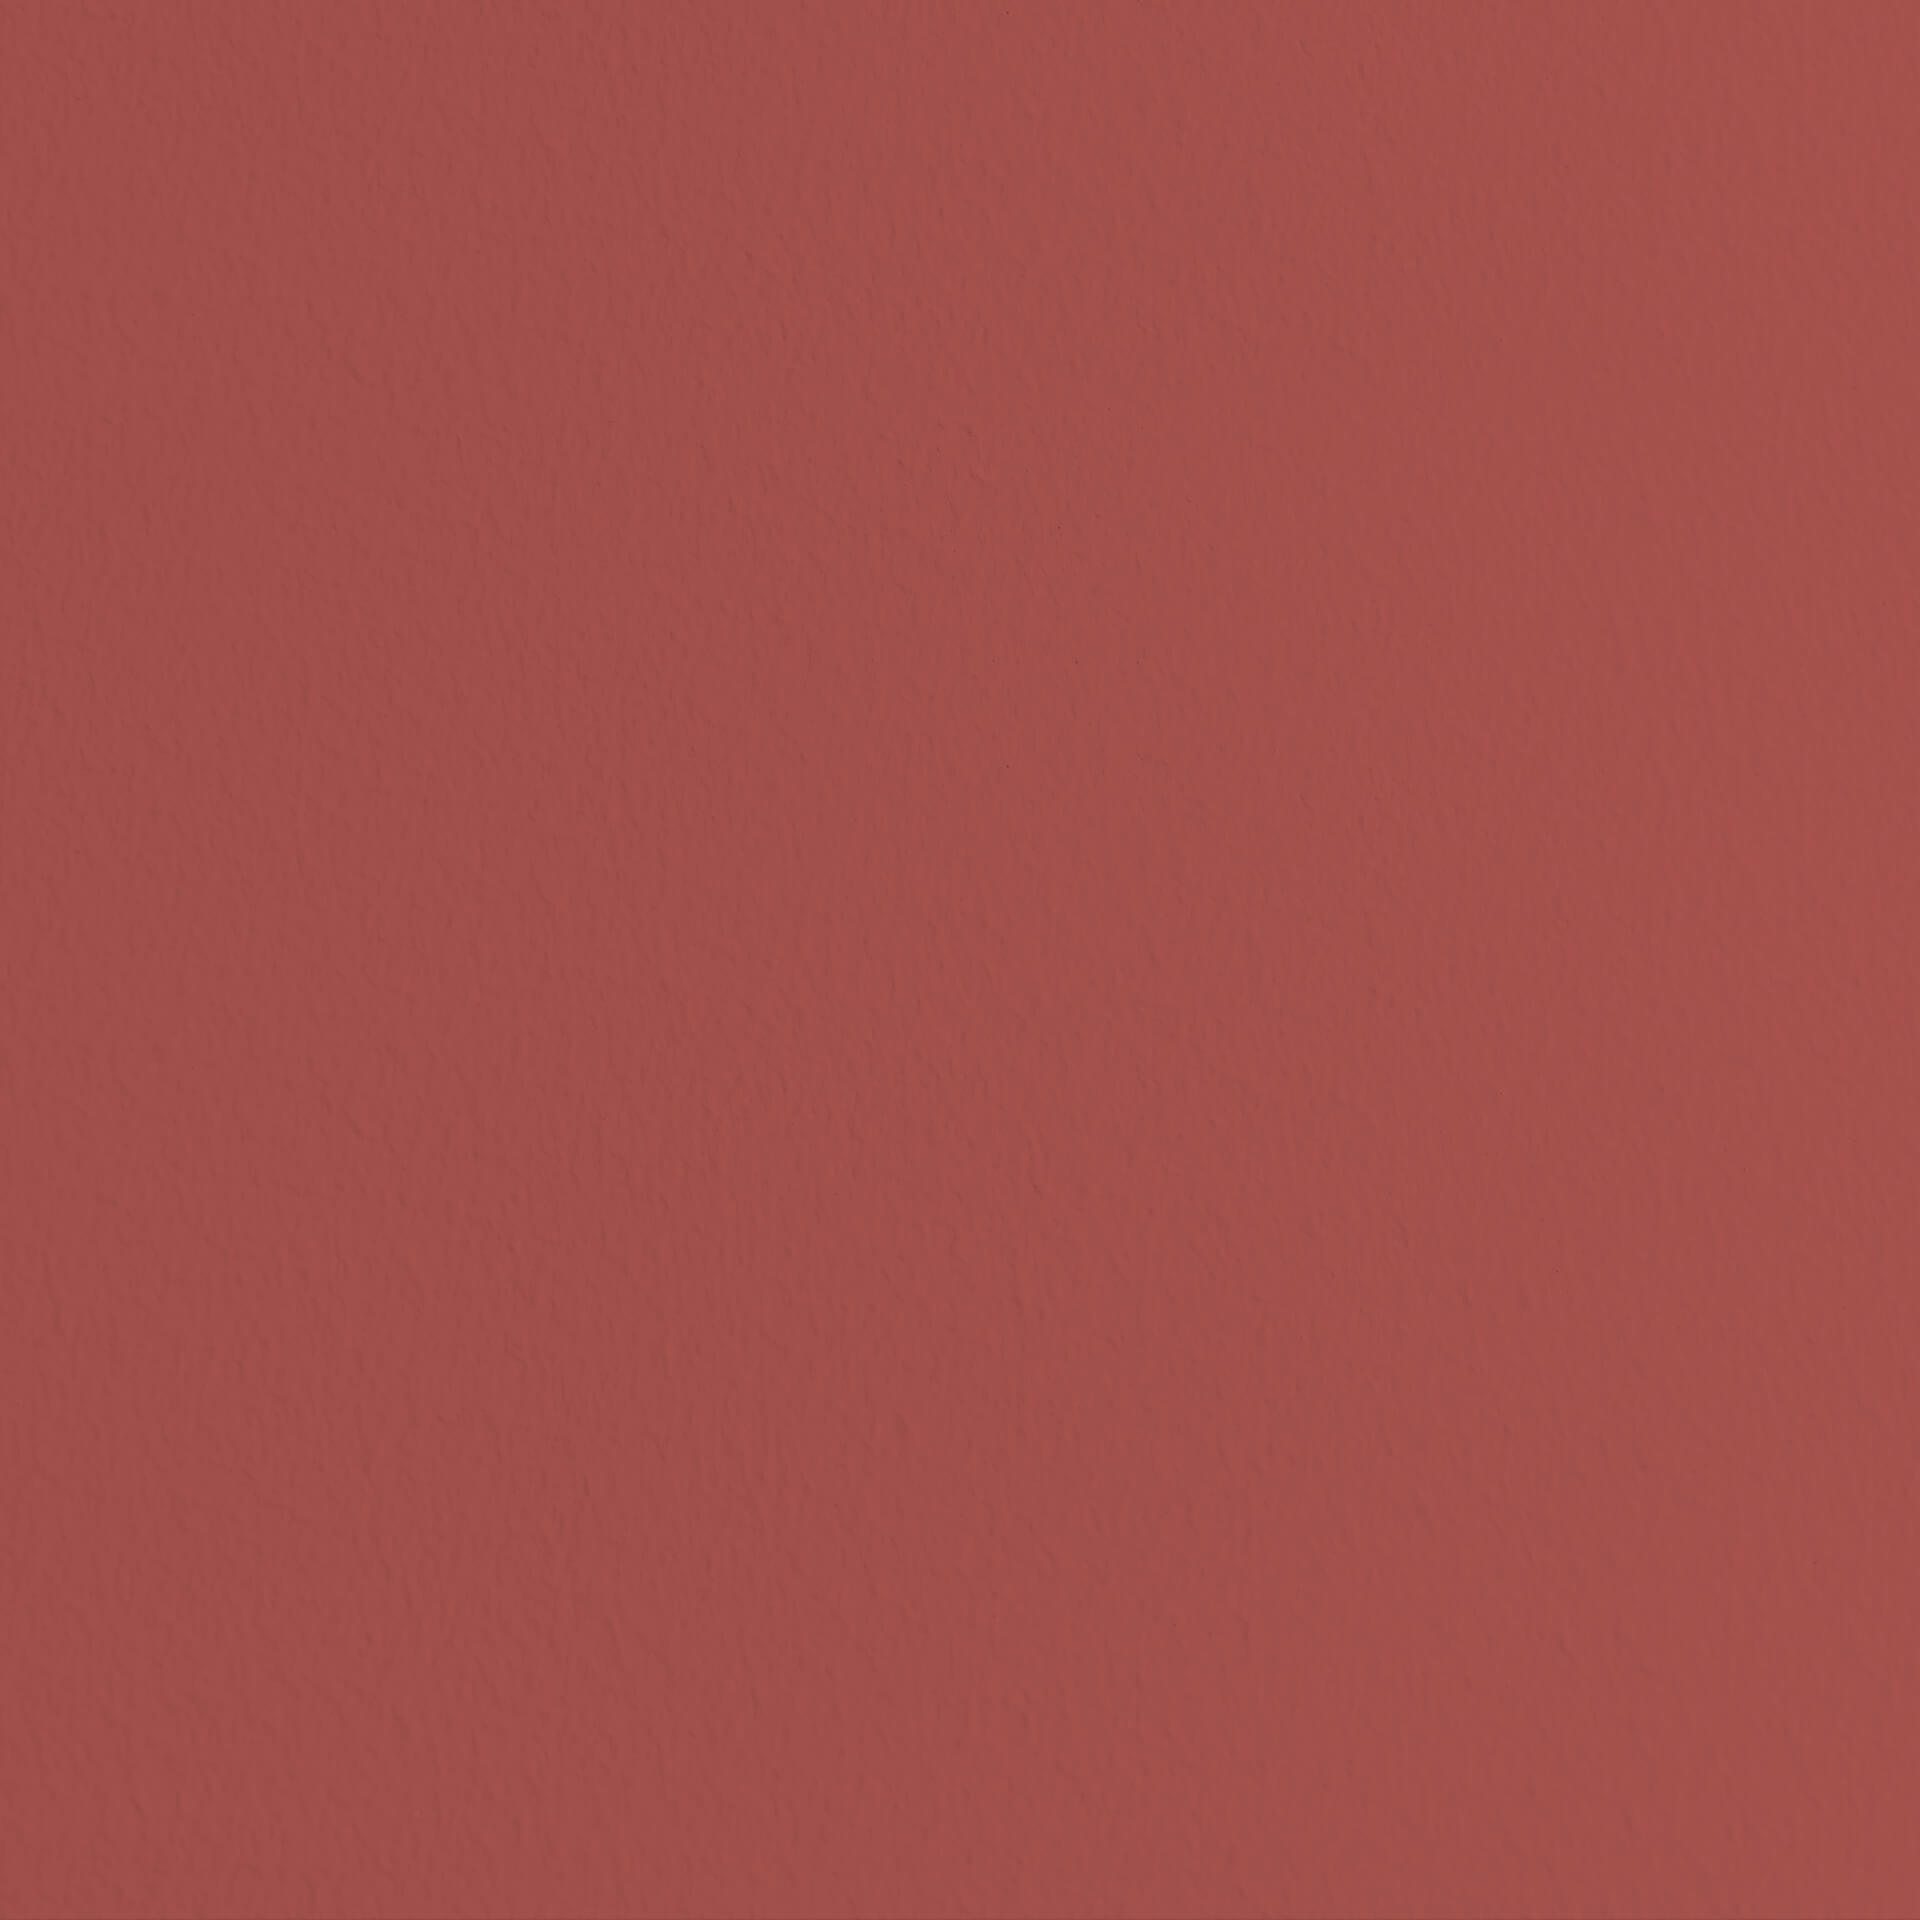 Mylands Mortlake Red No. 290 - Marble Matt Emulsion / Wandfarbe, 2.5L